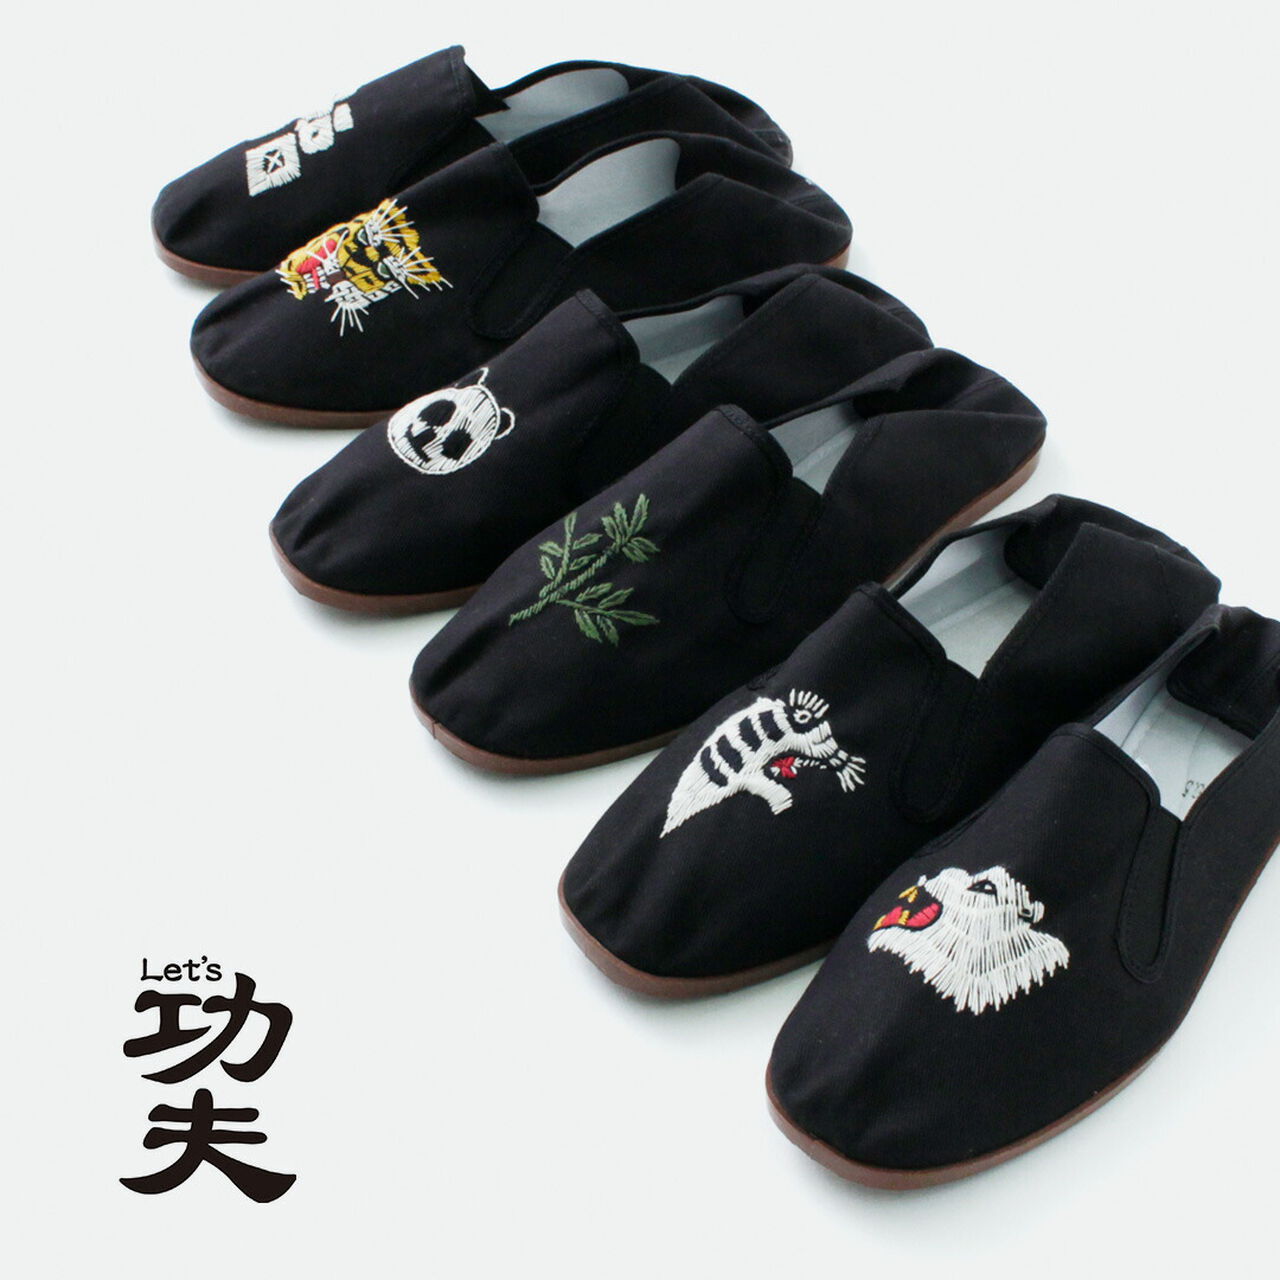 LET'S 功夫 Kung-fu Shoes